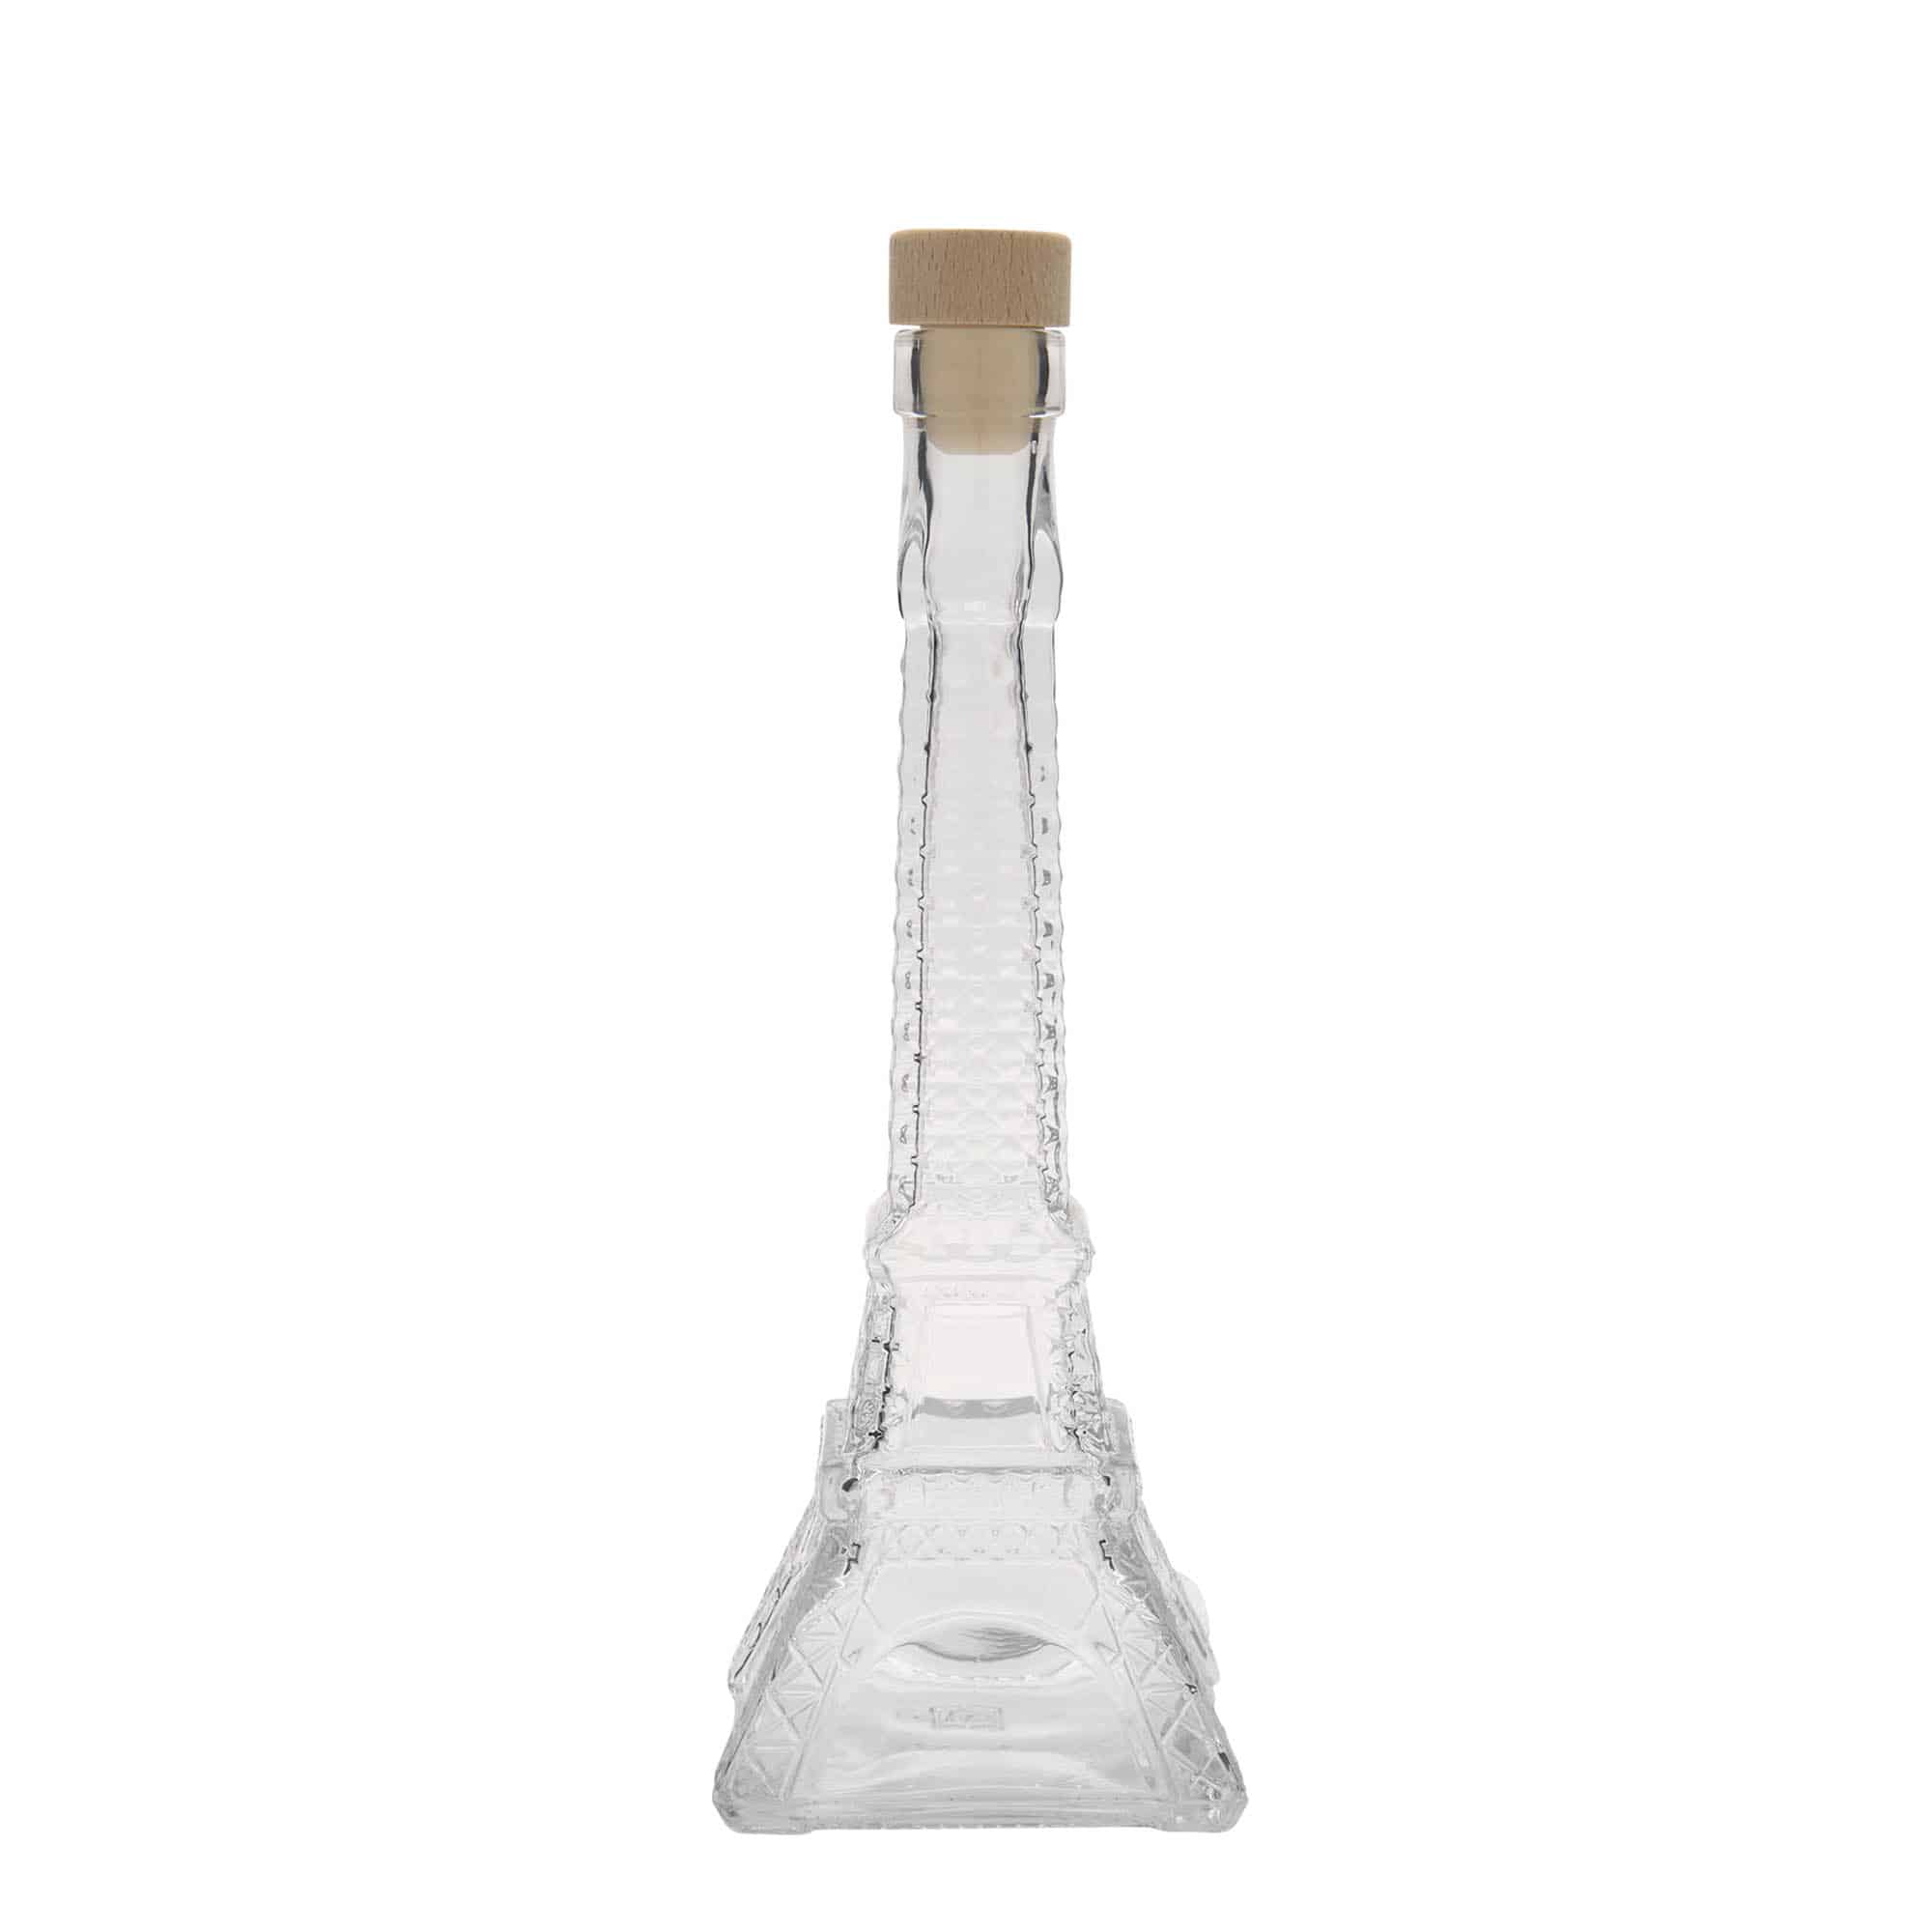 200 ml glass bottle 'Eiffel Tower', closure: cork